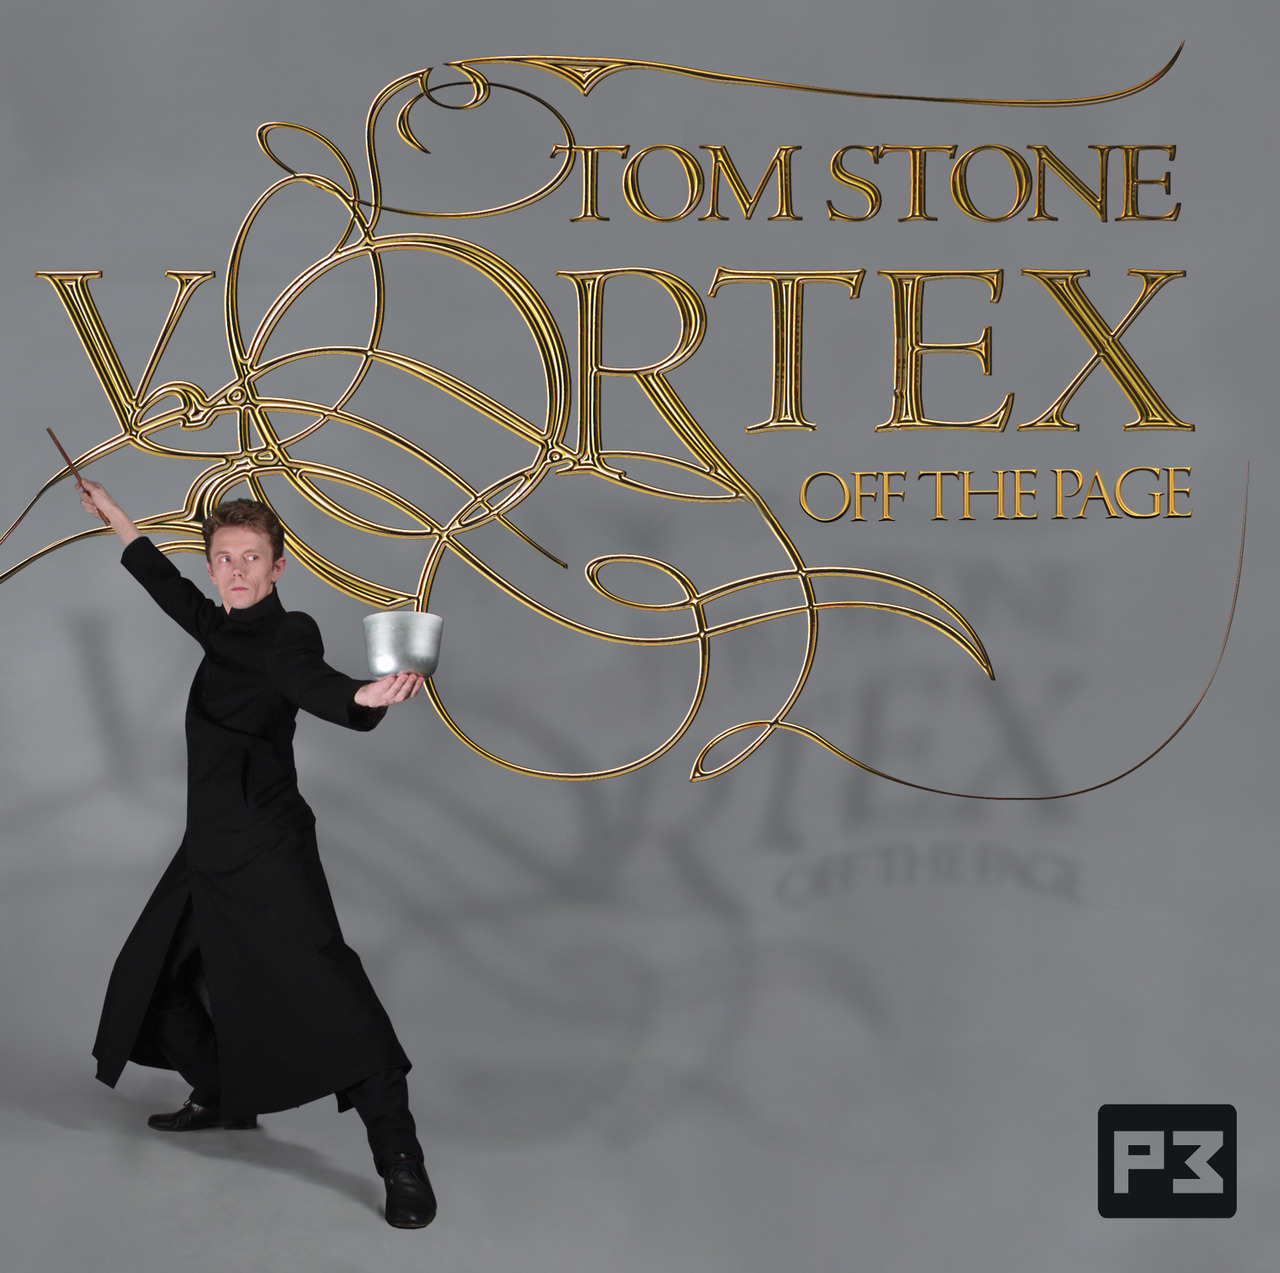 Tom Stone - Vortex: Off the Page